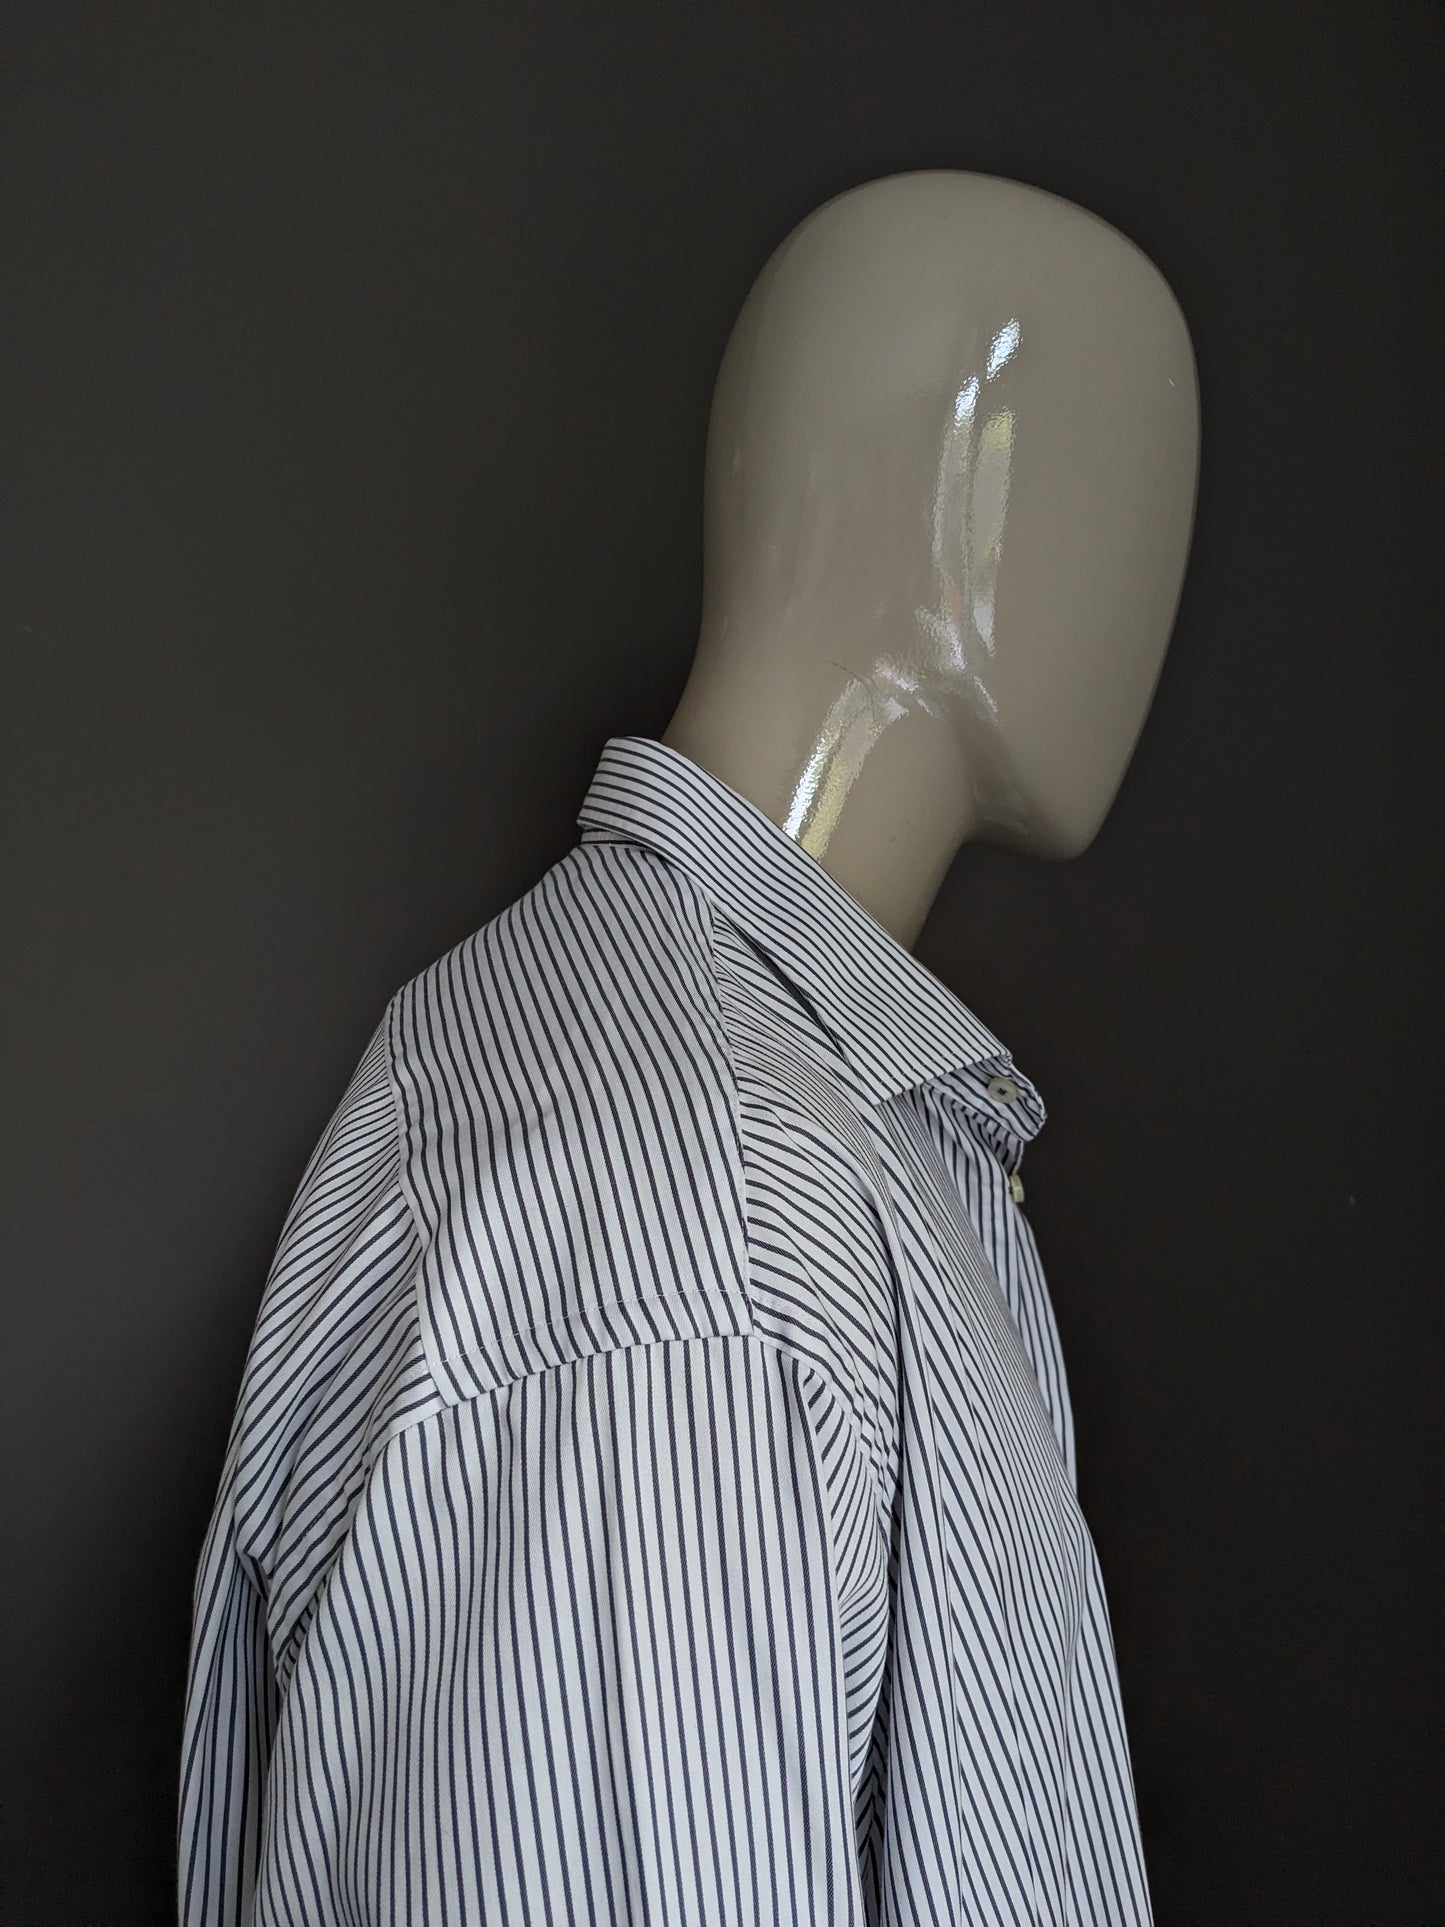 G&G special sizes for men overhemd. Wit Grijs gestreept. Maat 3XL / XXXL. Regular Fit.